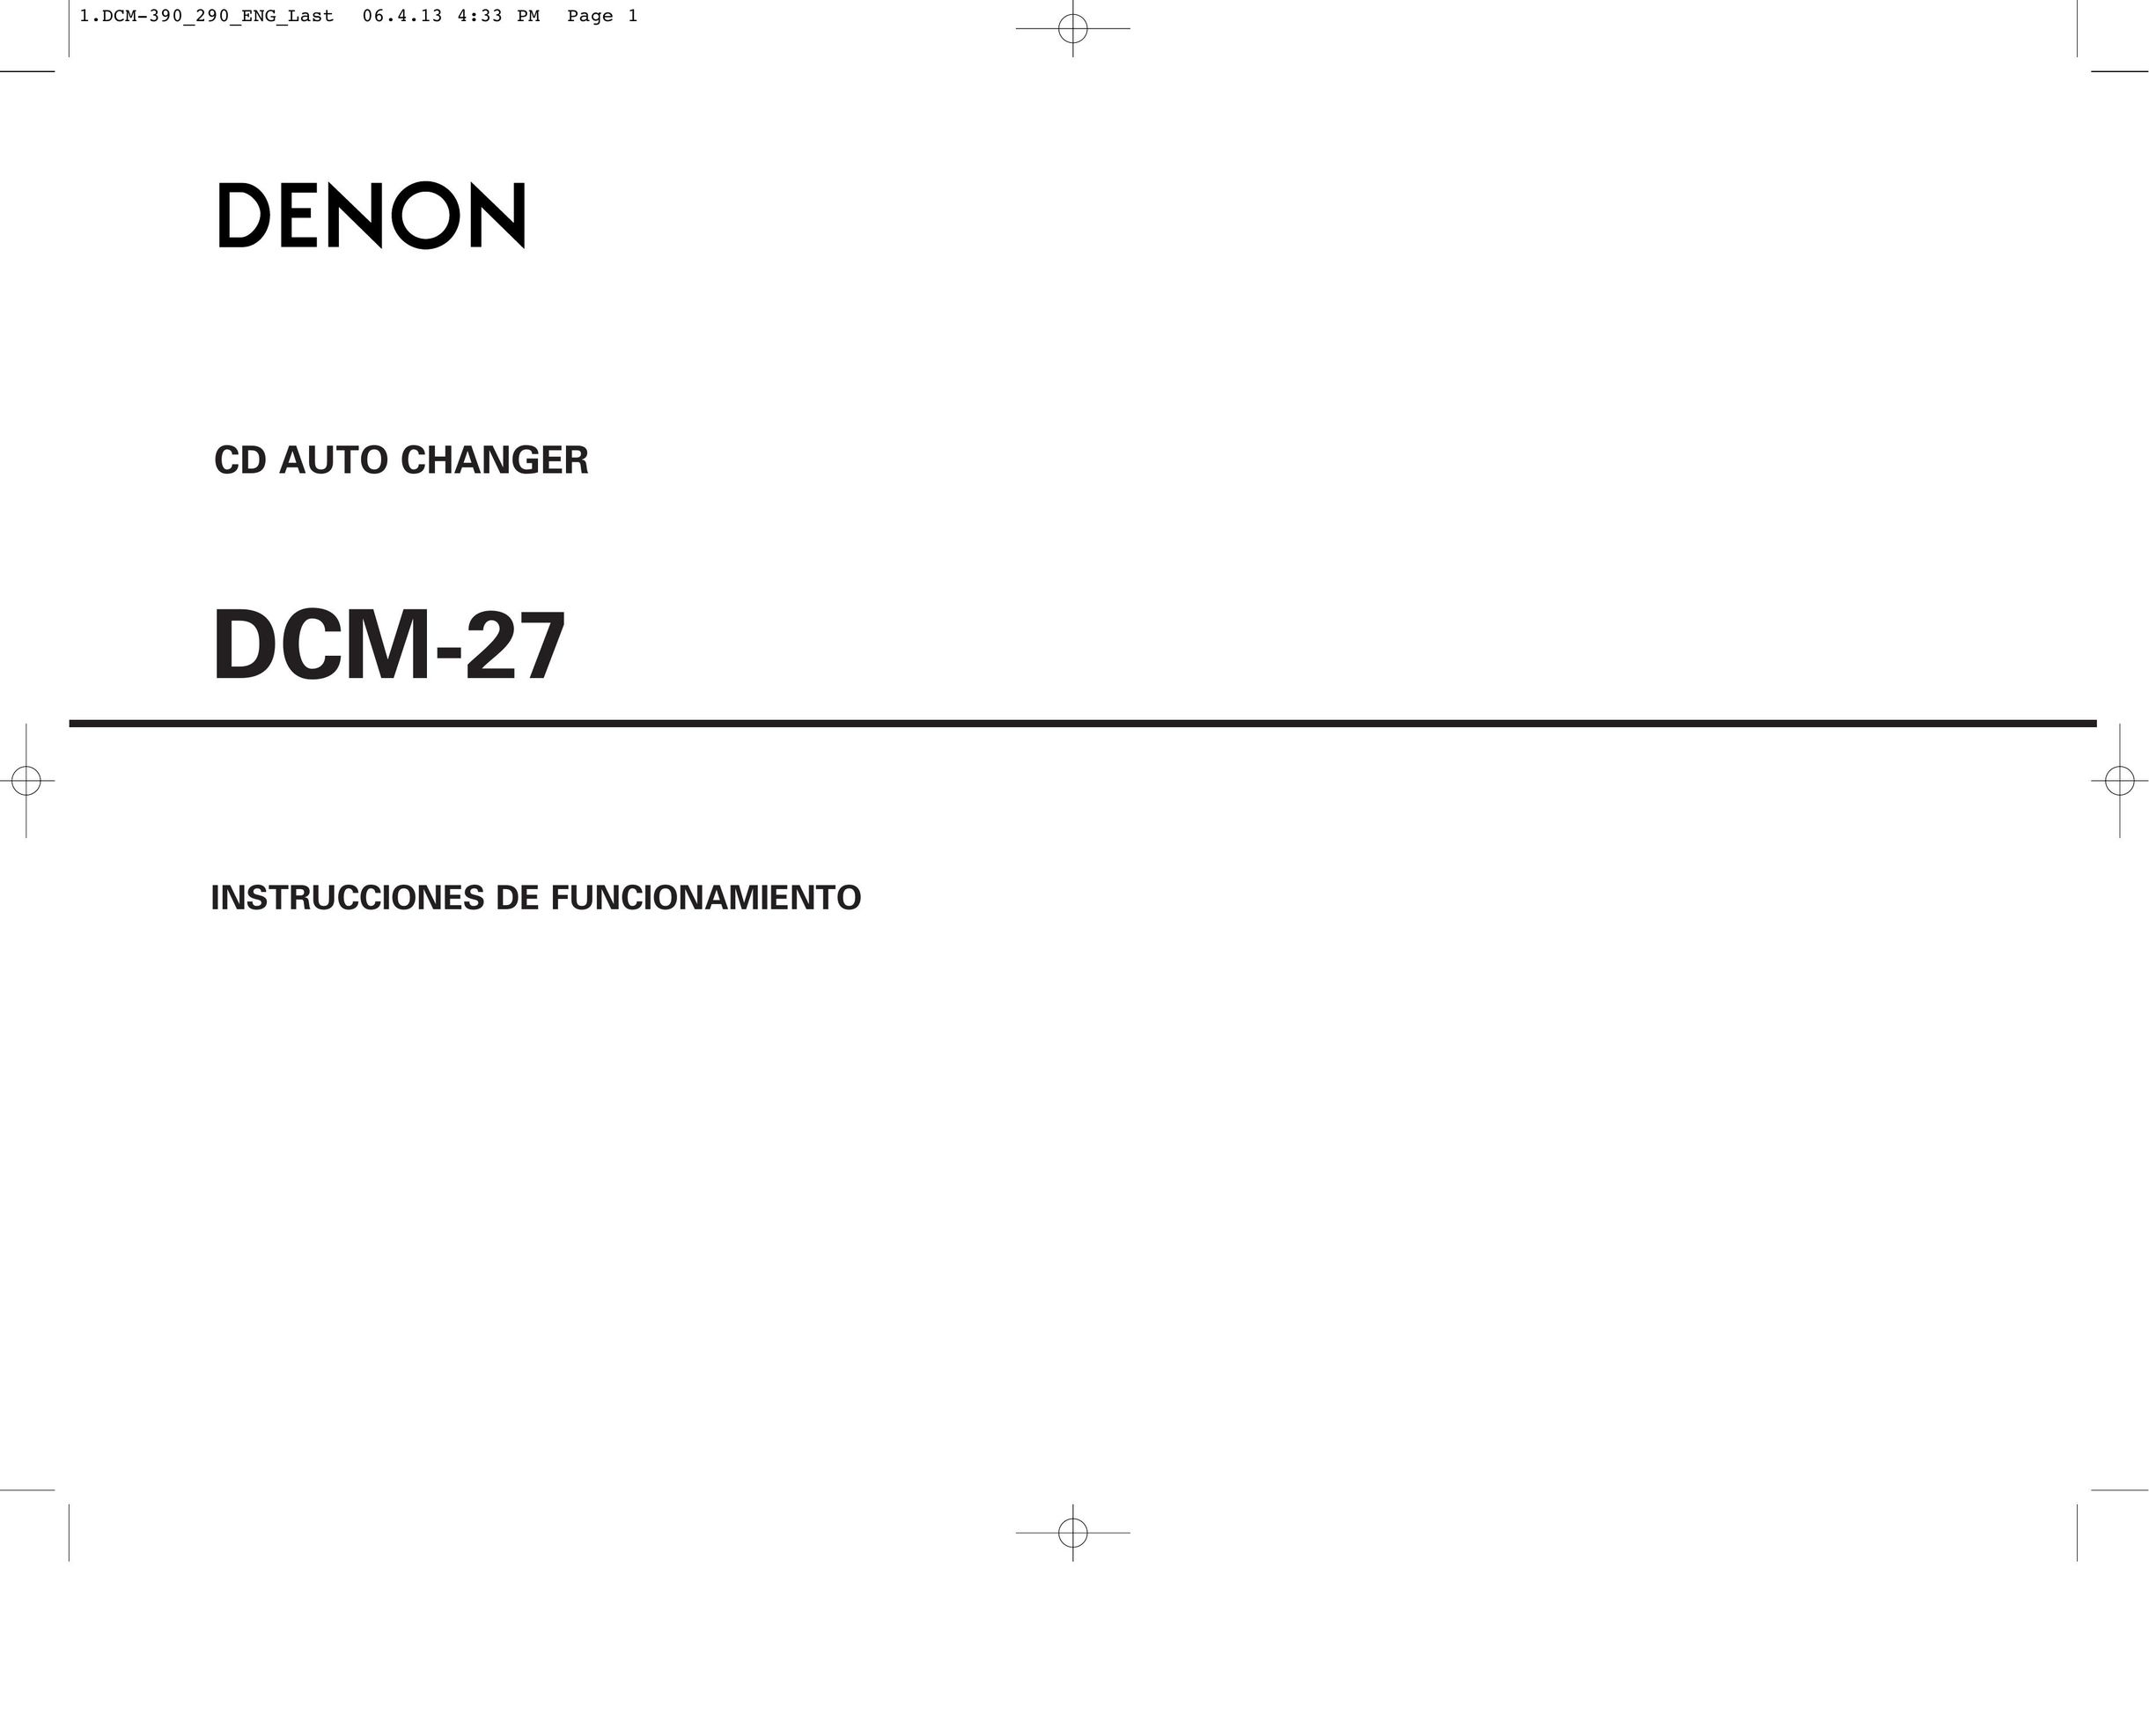 Denon DCM-27 Car Stereo System User Manual